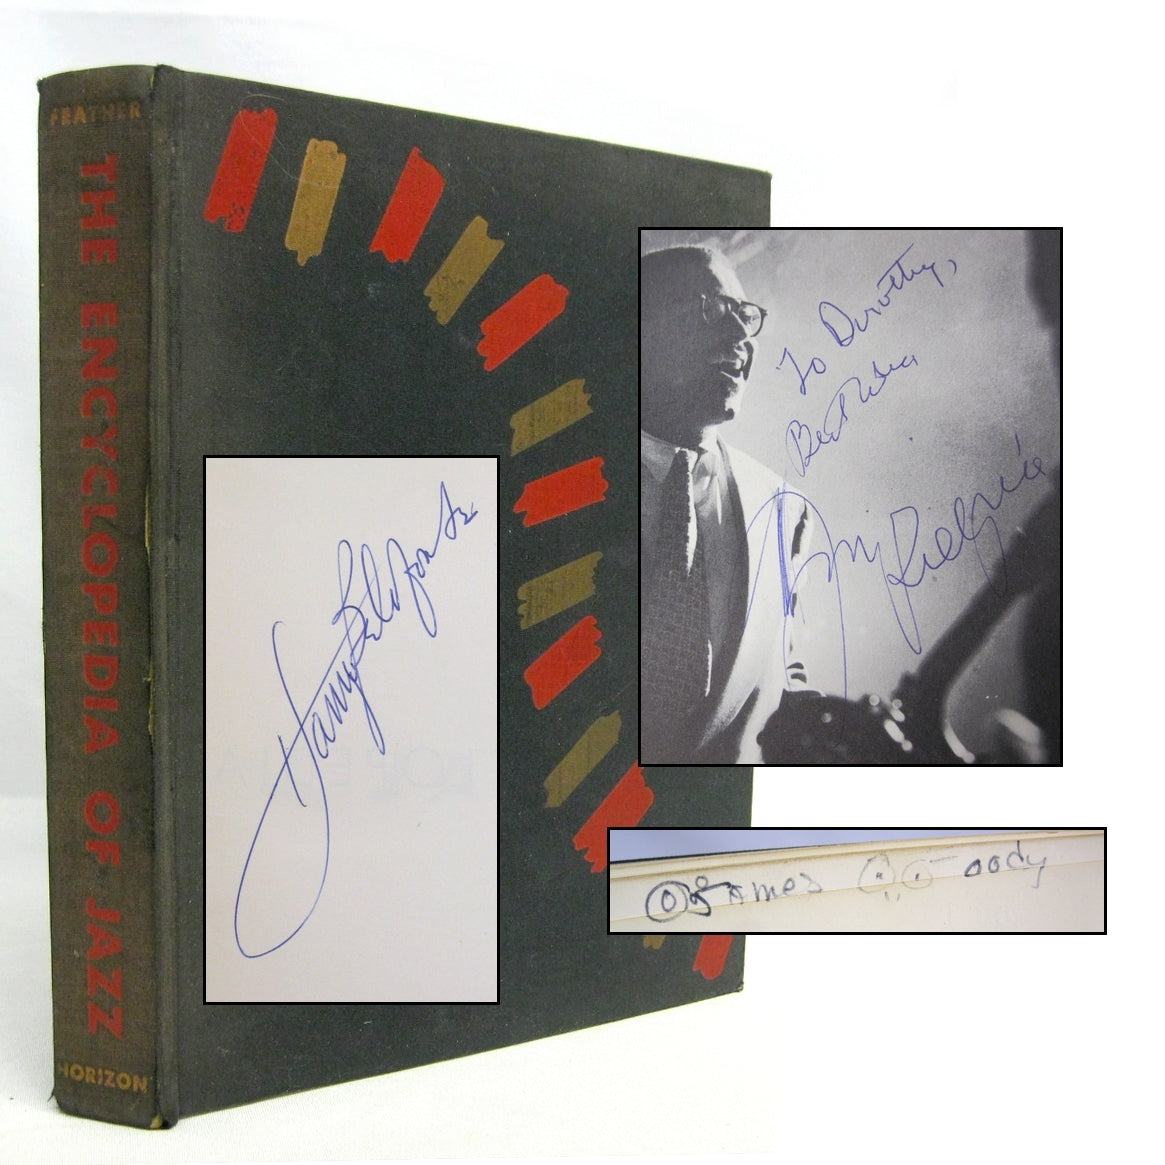 Encyclopedia of Jazz by Leonard Feather